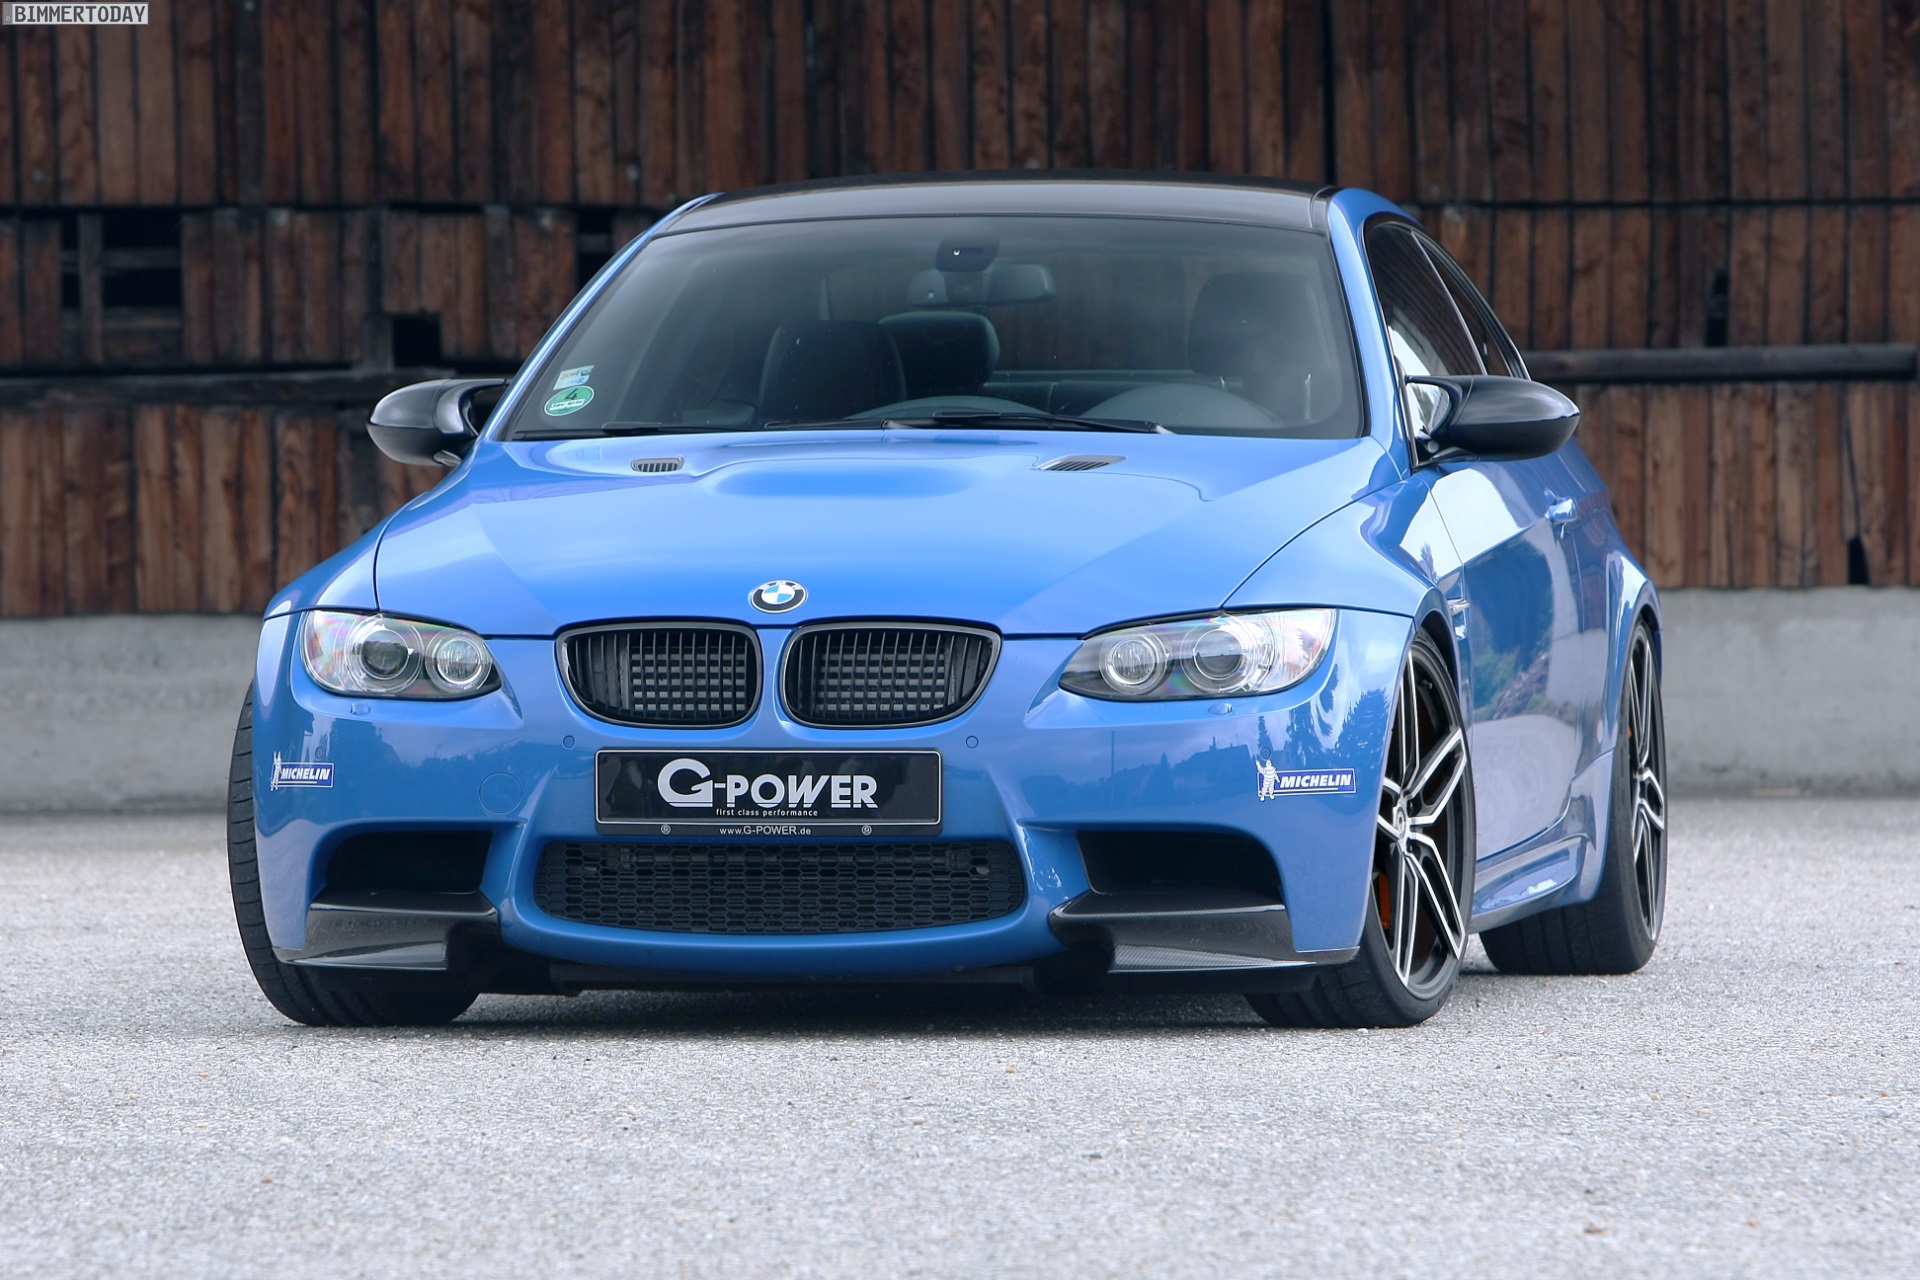 https://cdn.bimmertoday.de/wp-content/uploads/2015/02/G-Power-BMW-M3-E92-Tuning-V8-Kompressor-01.jpg